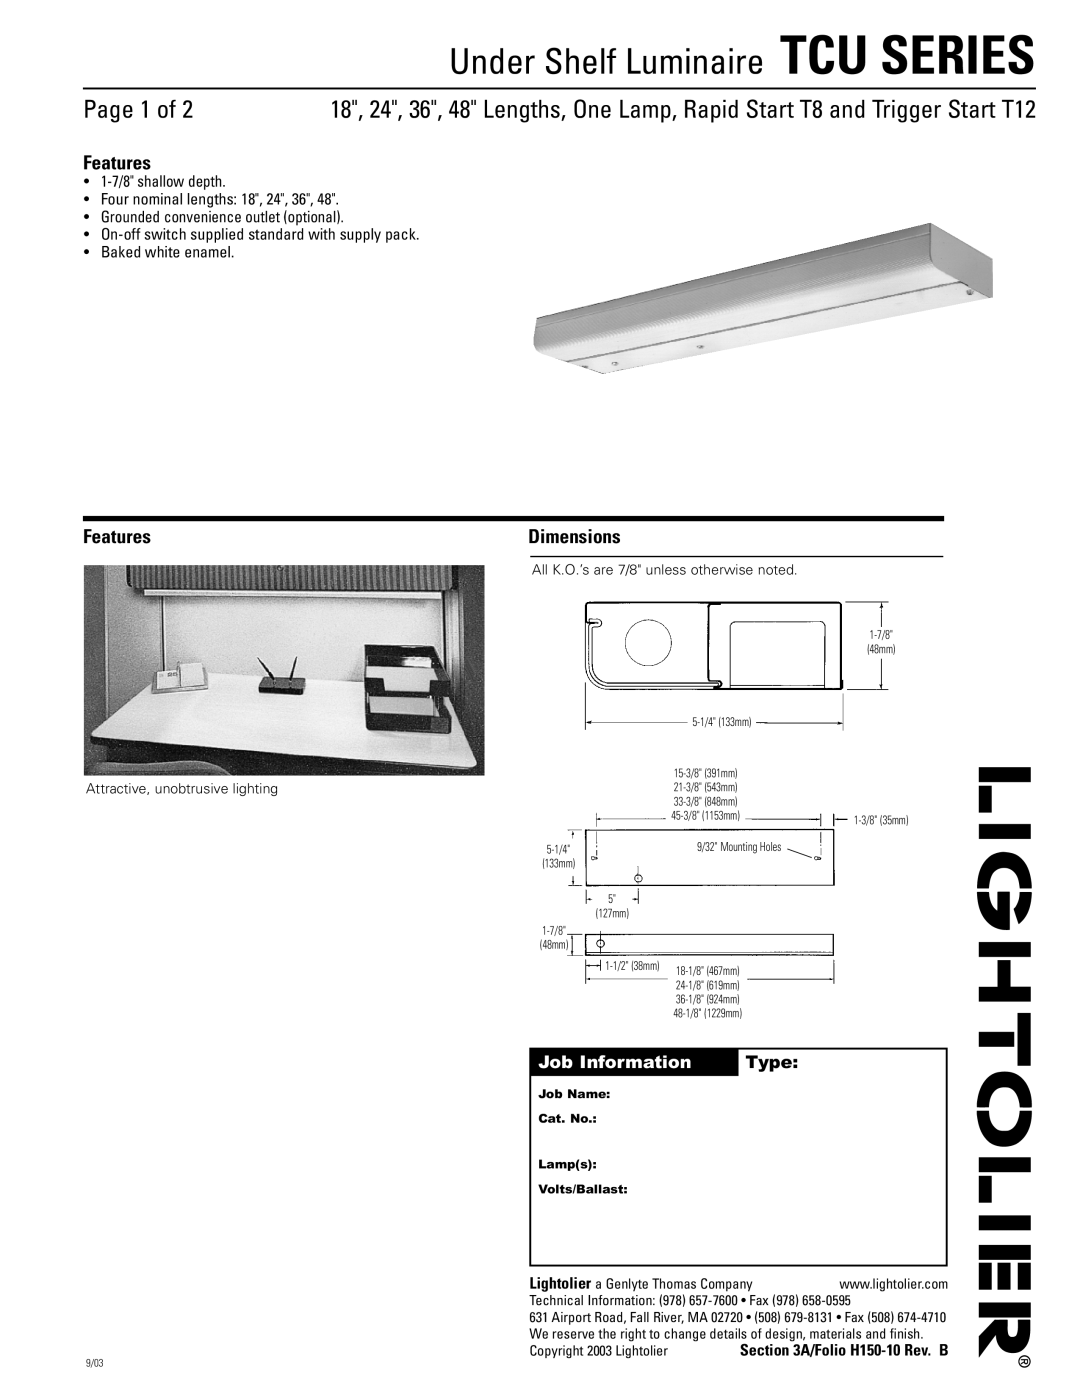 Lightolier TCU Series dimensions Under Shelf Luminaire TCU SERIES, FeaturesDimensions, Job Information Type, 1-1/238mm 